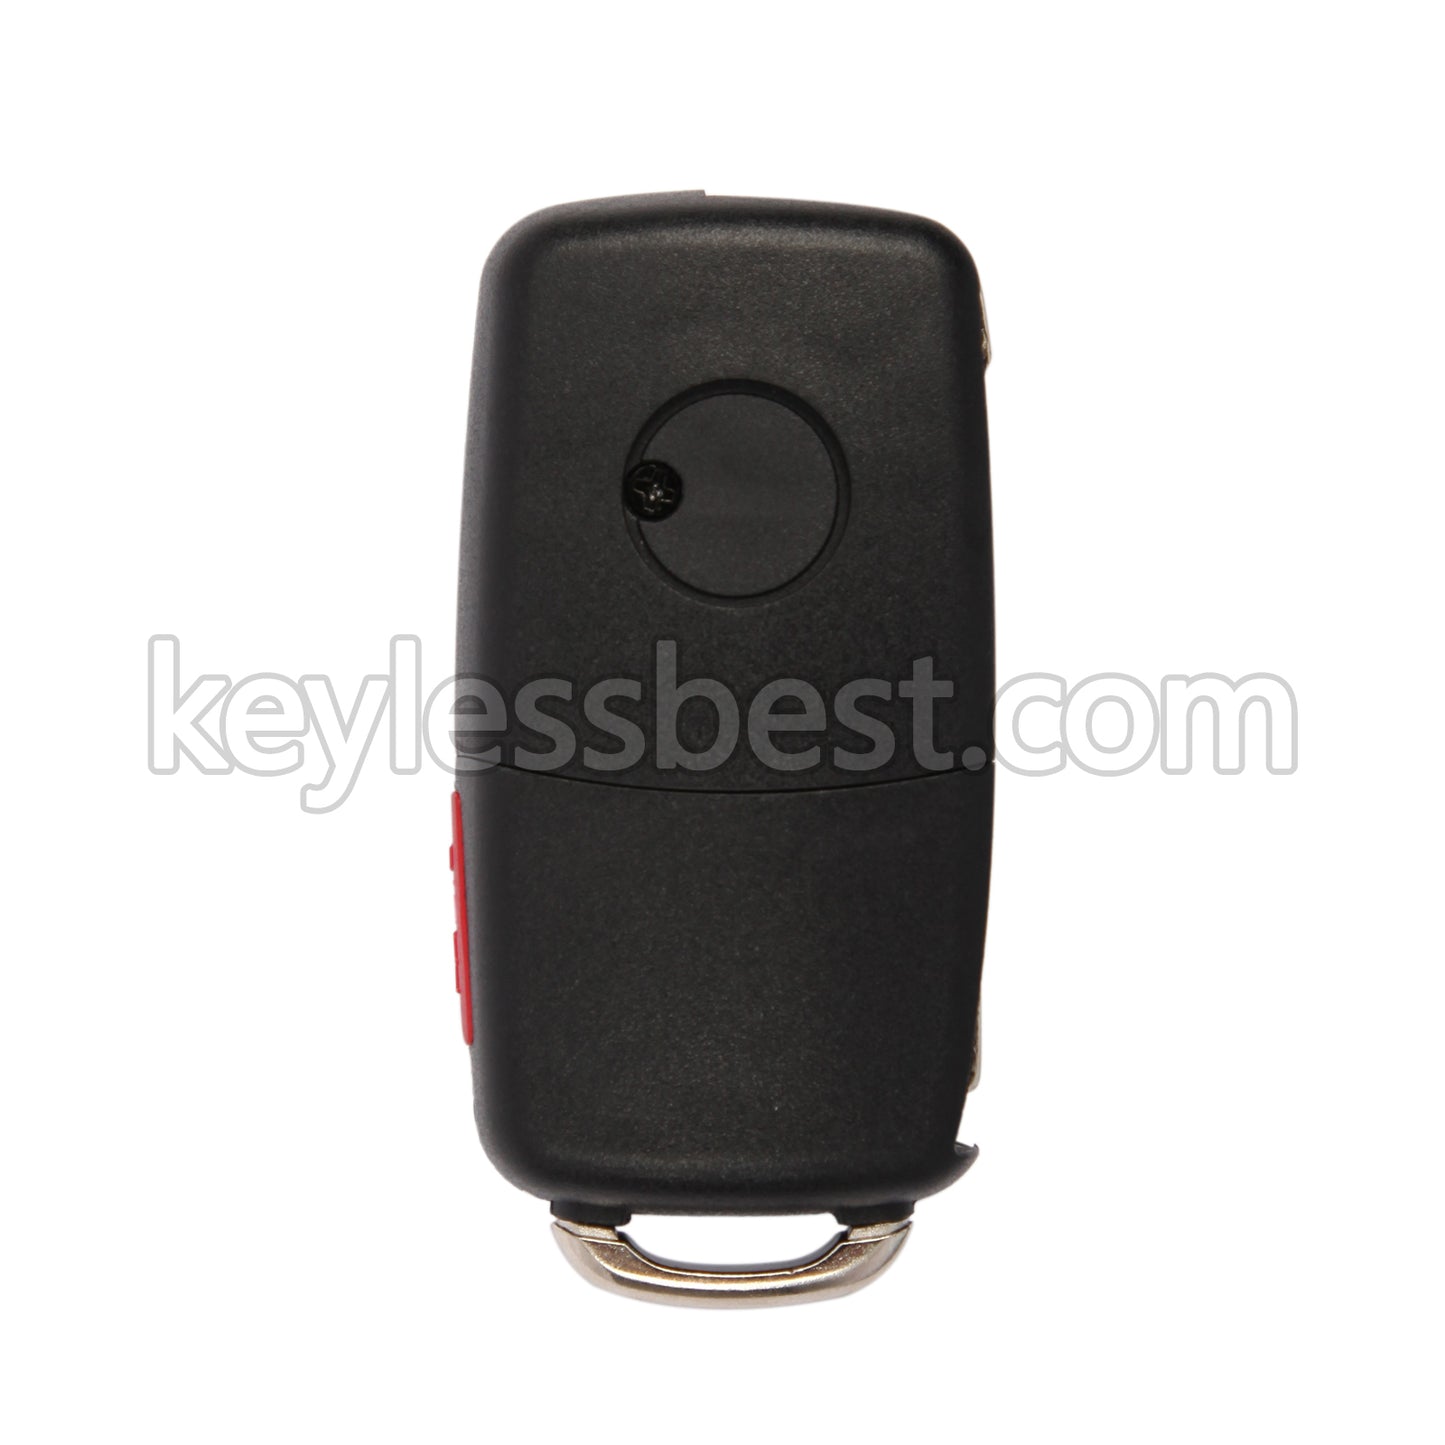 2011-2016 Volkswagen Beetle CC Eos Touareg / 4 Buttons Remote Key / NBG010180T / 315MHz